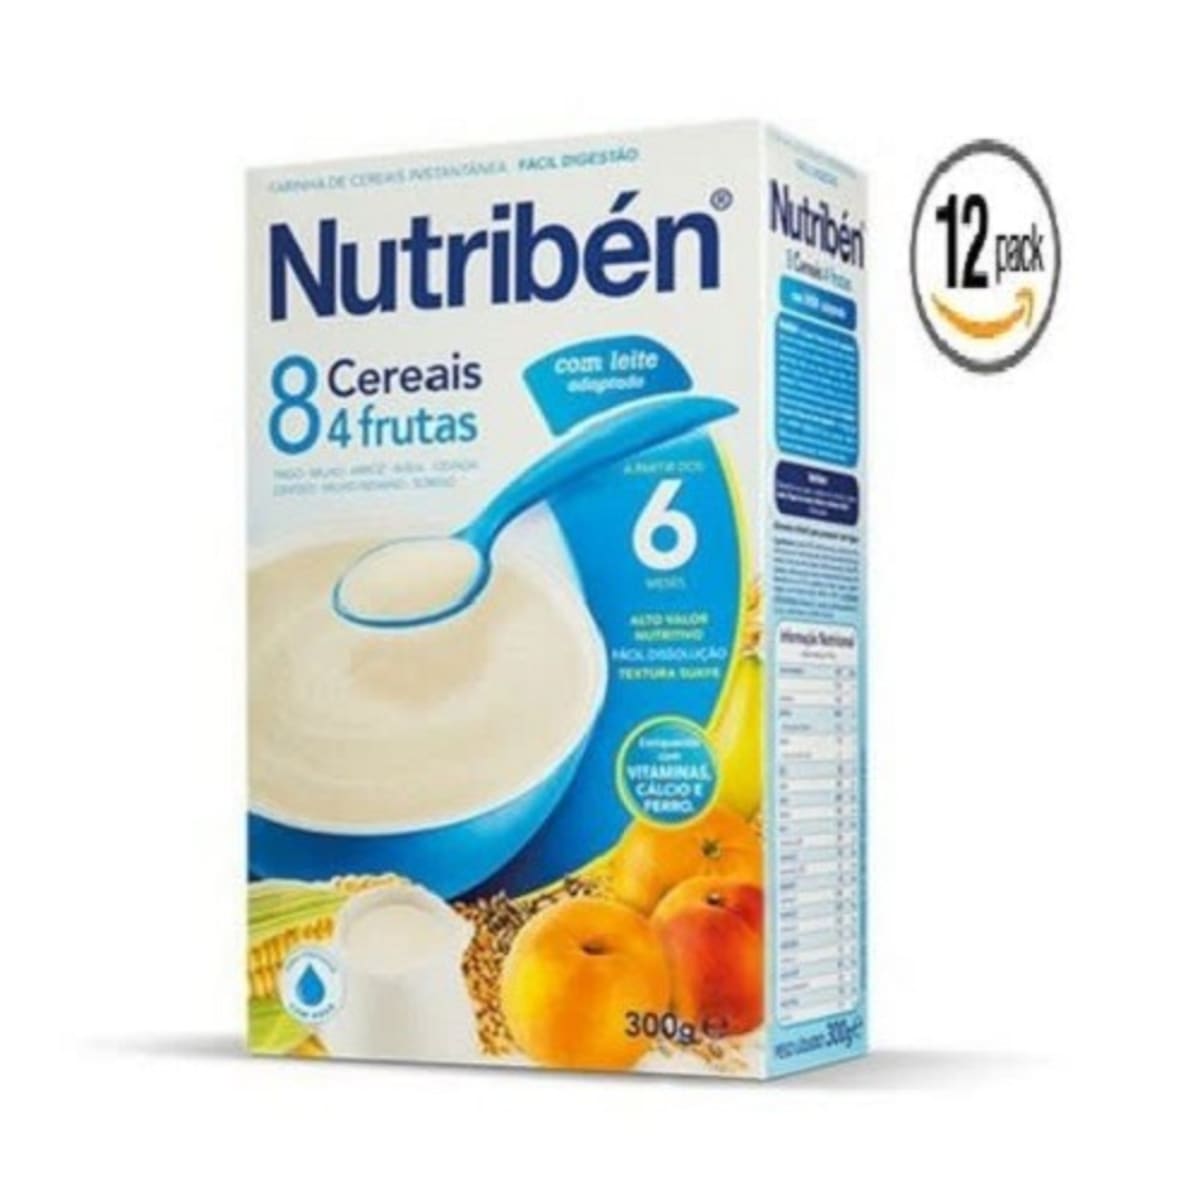 Nutriben 8 Cereals, 4 Fruits With Milk; 6mths+